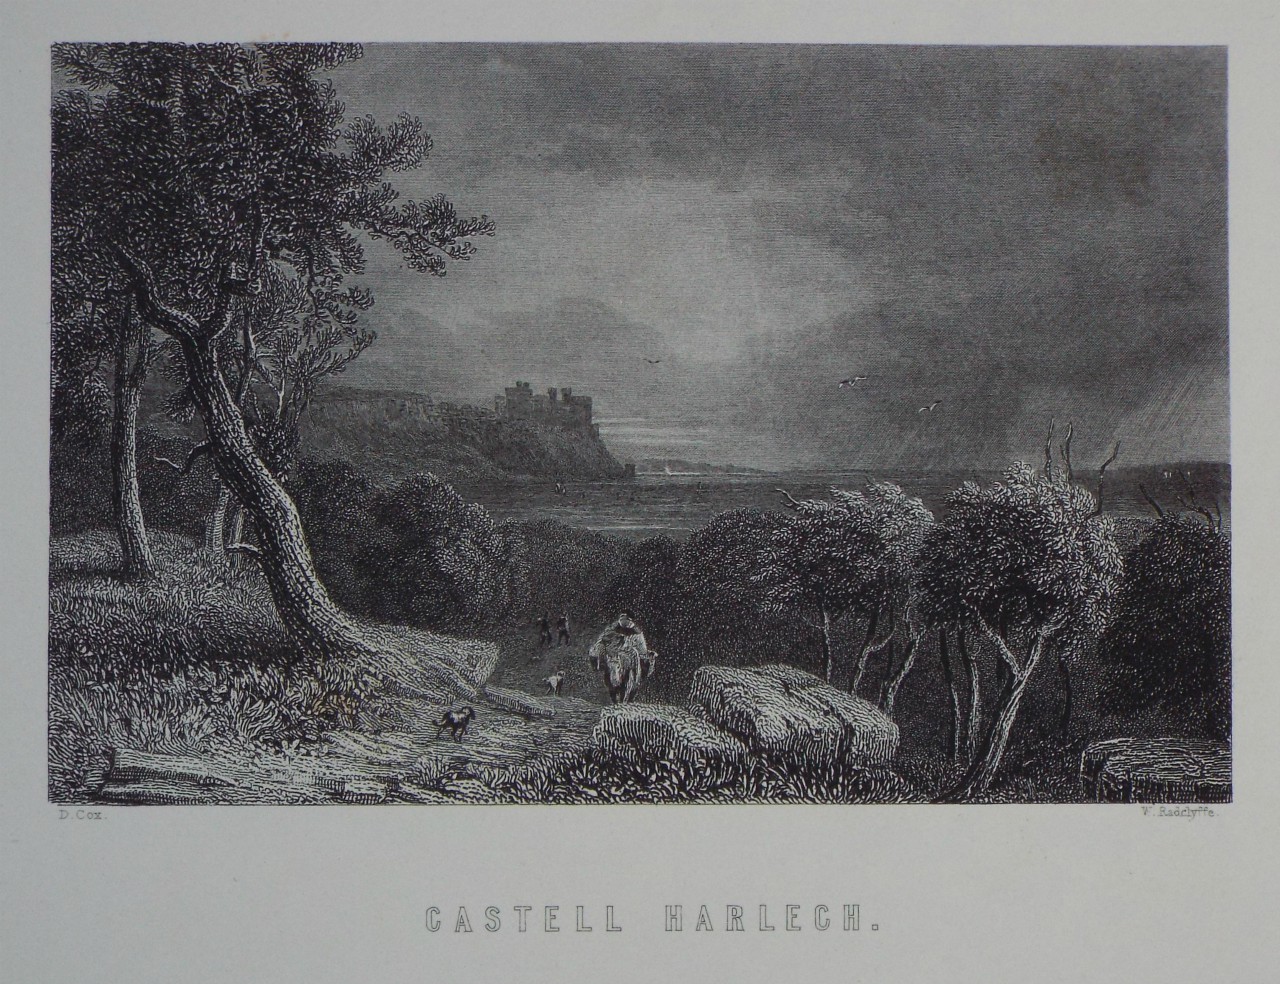 Print - Castell Harlech. - Radclyffe